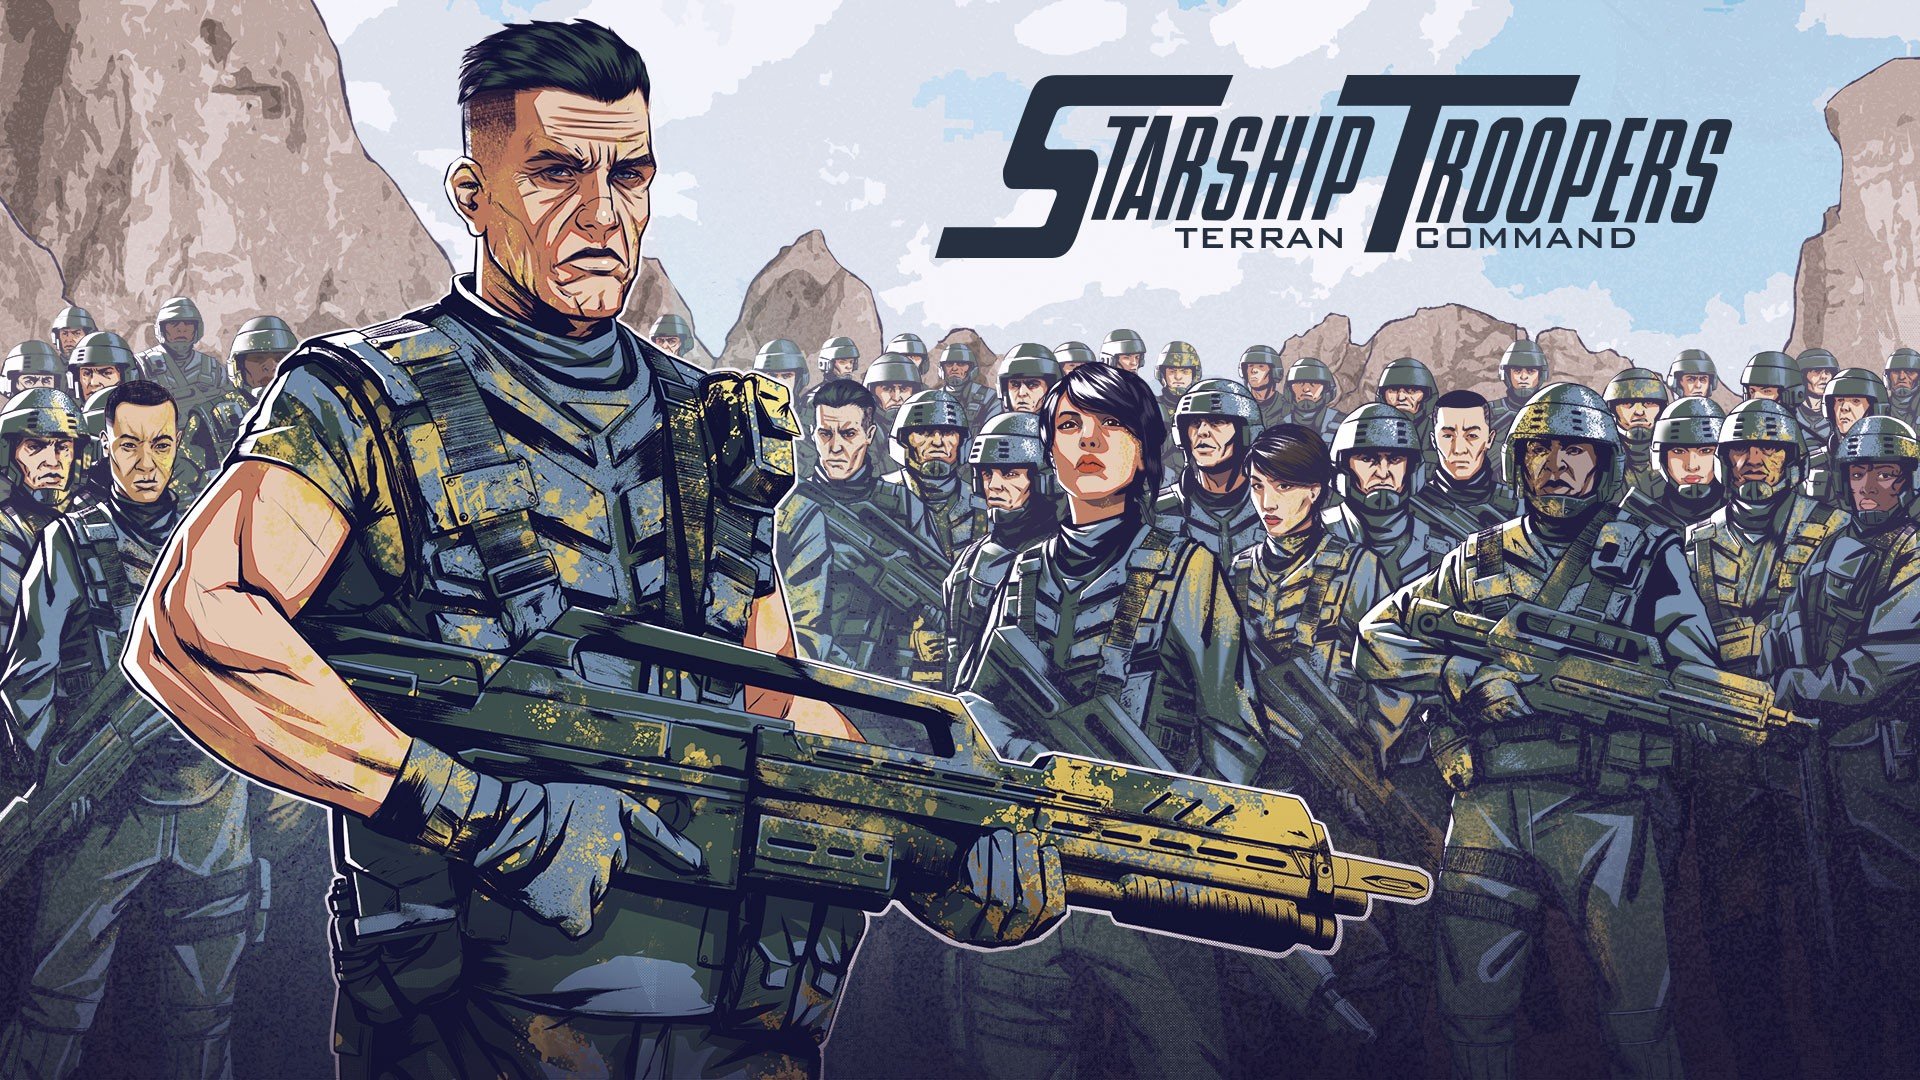 Скачать Starship Troopers - Terran Command гамиго